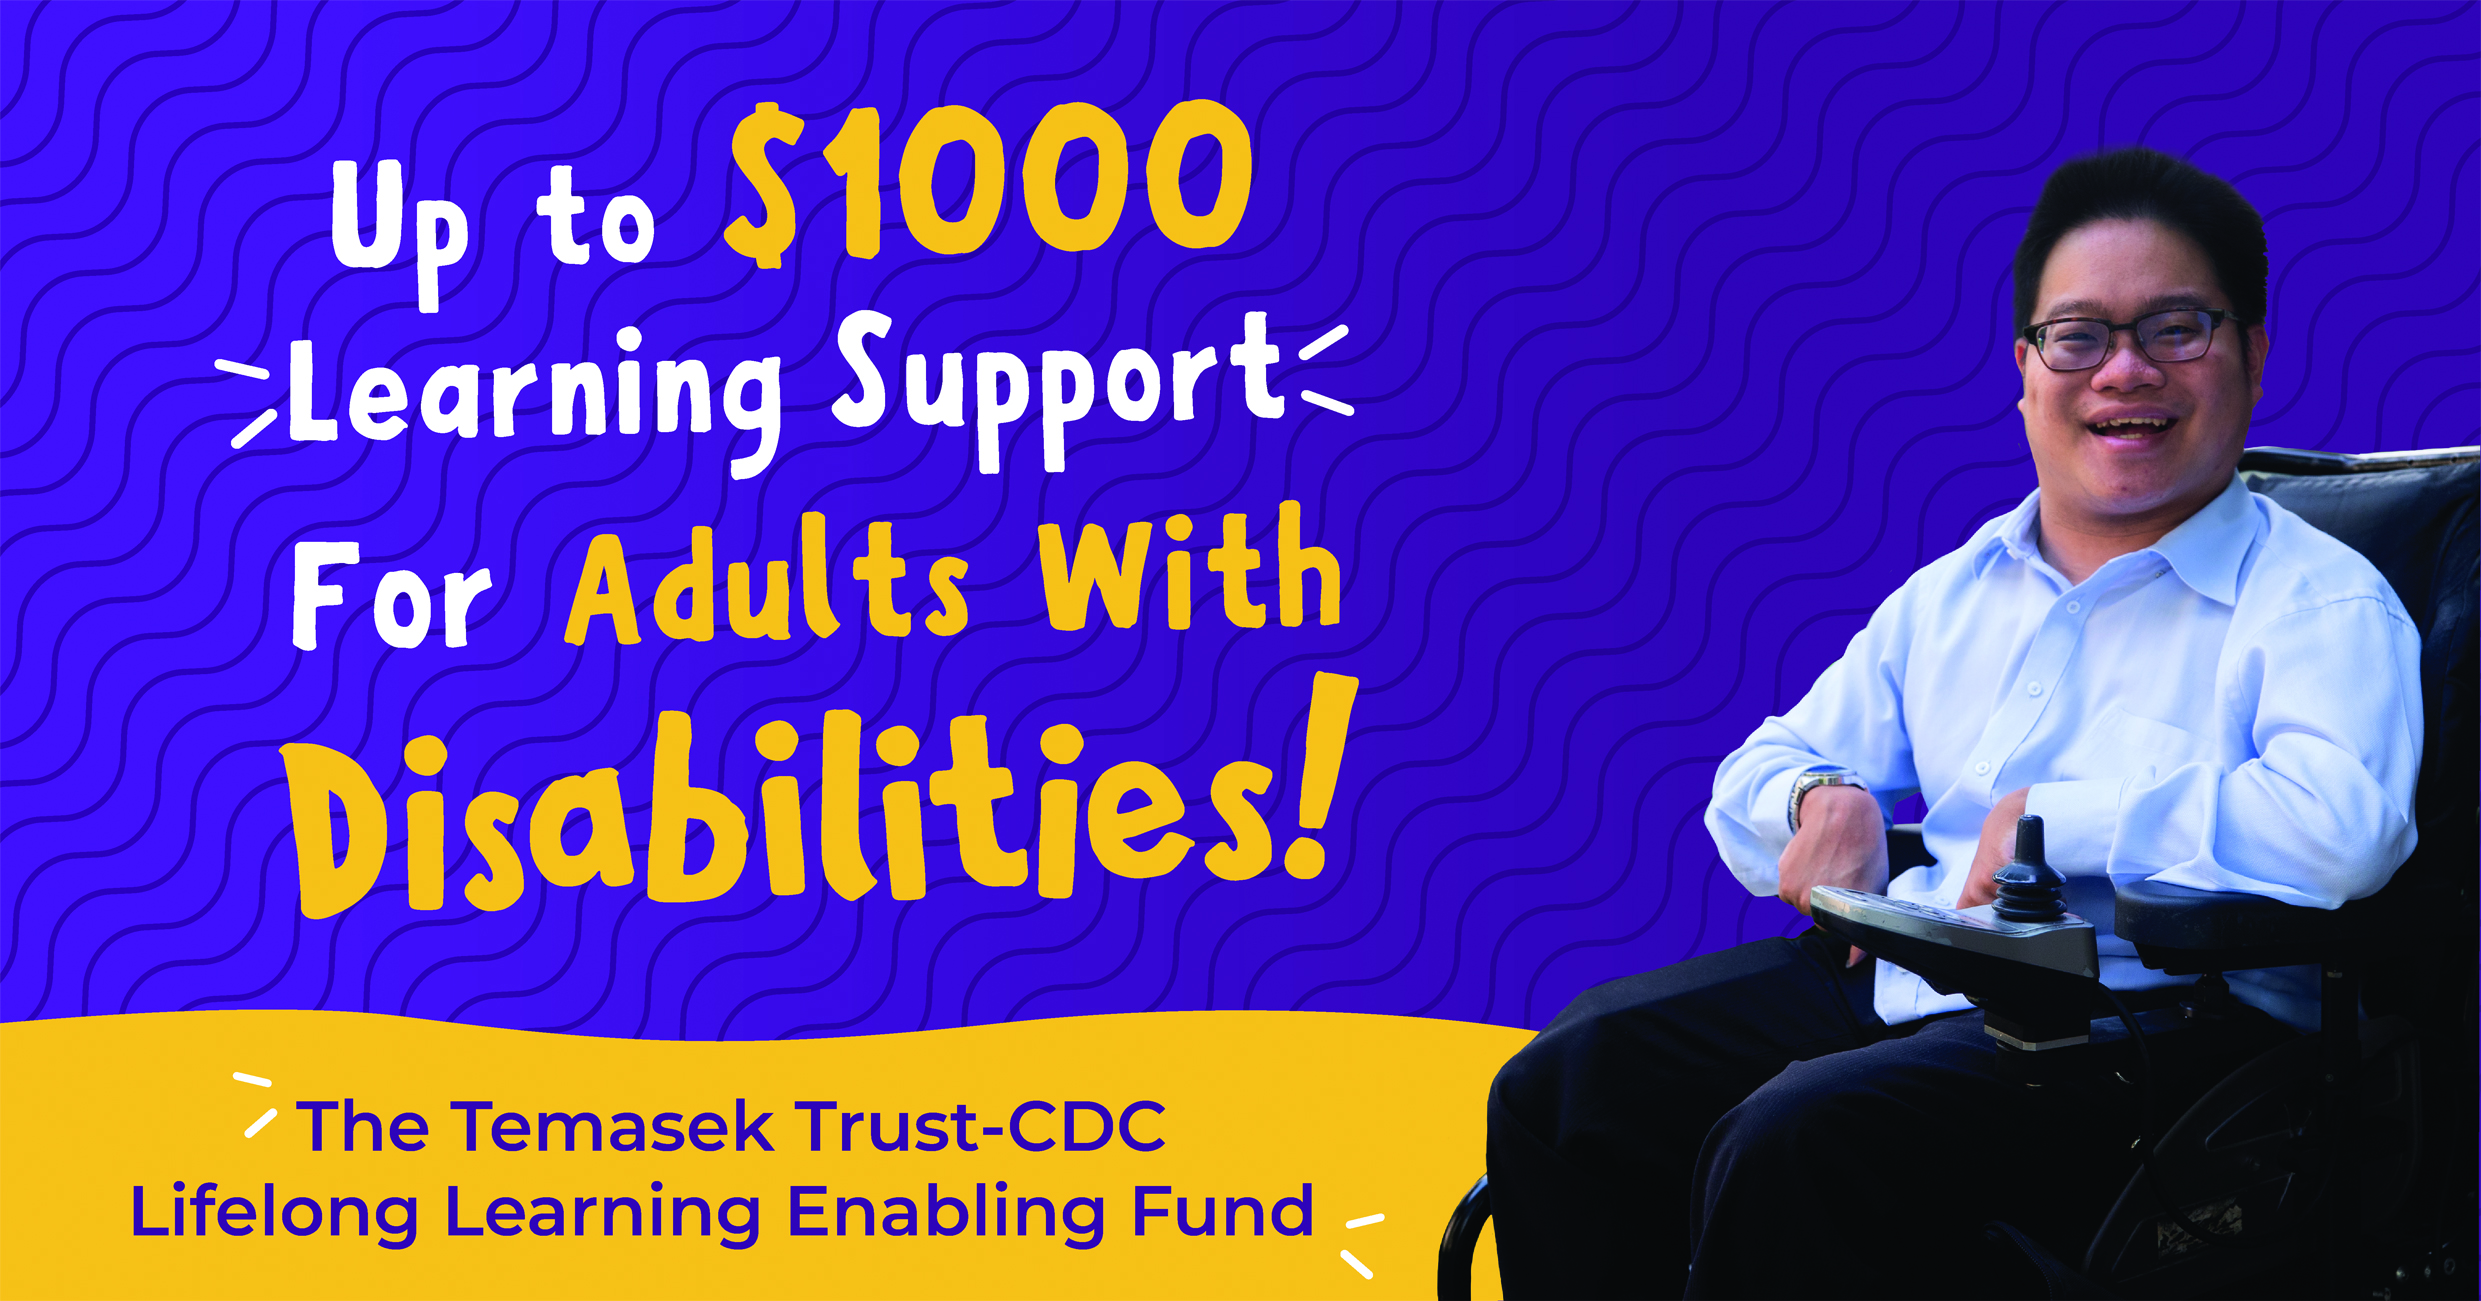 Temasek Trust-CDC Lifelong Learning Enabling Fund